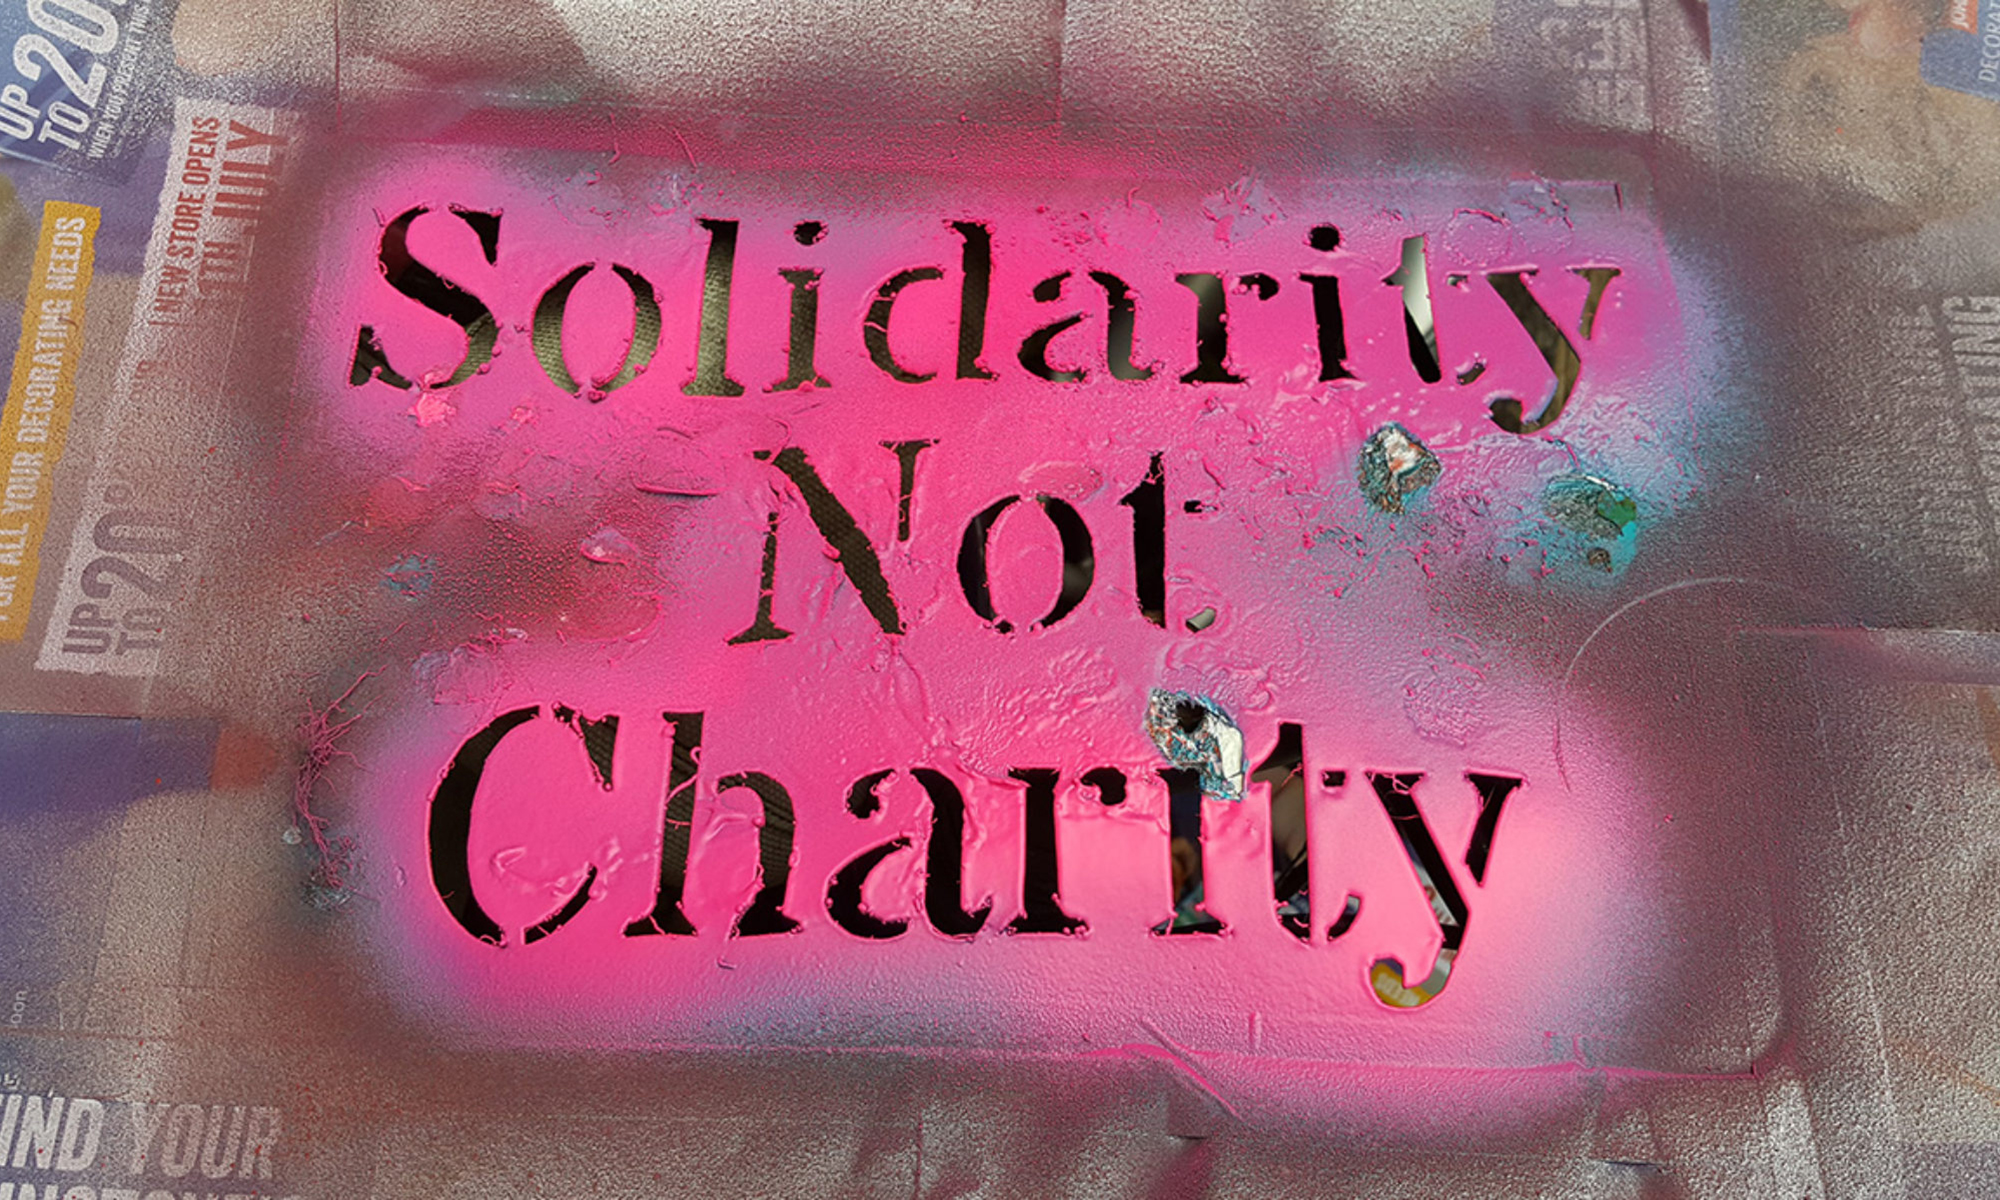 Solidarity Not Charity